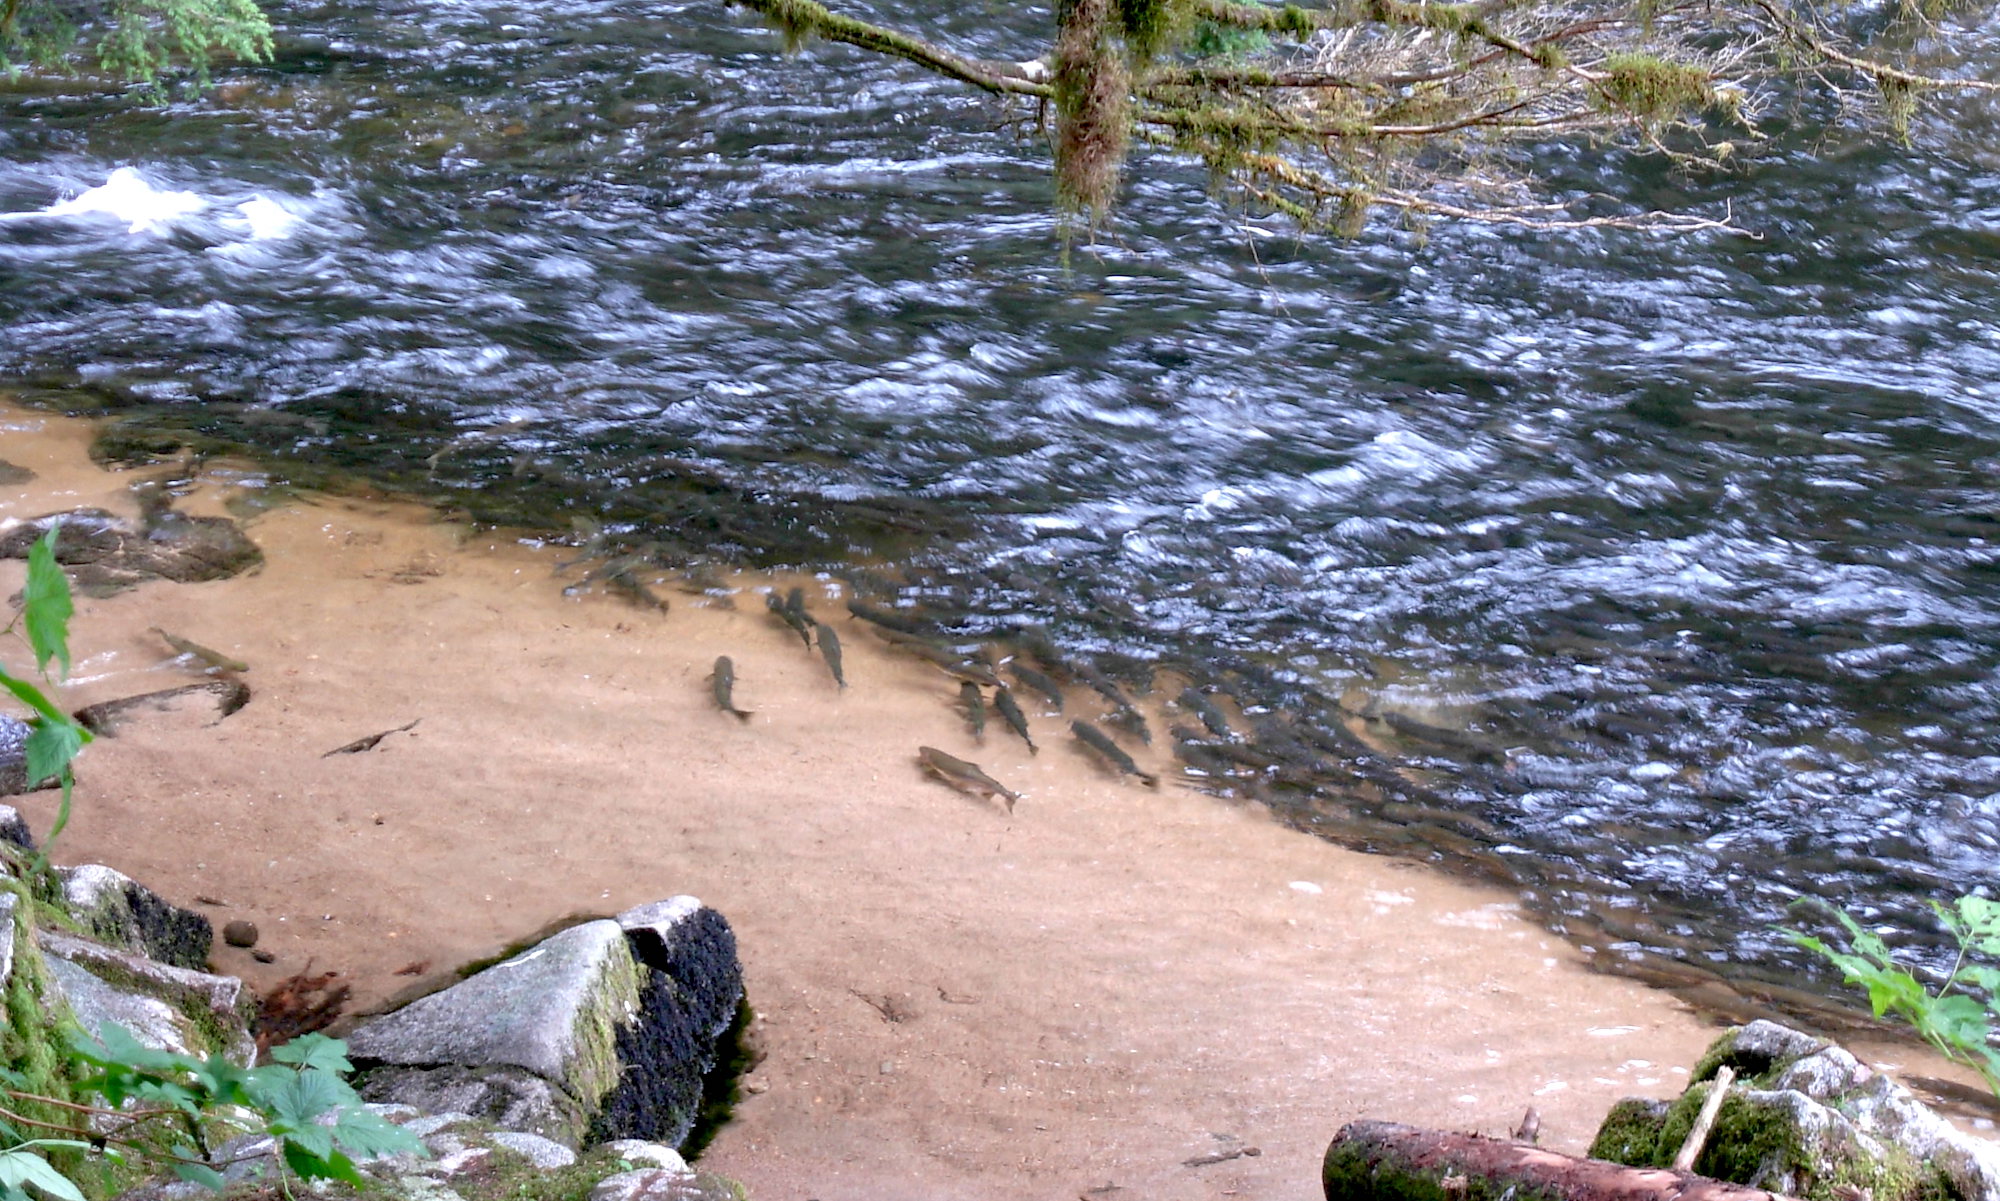 A stream full of hundreds of swimming salmon.